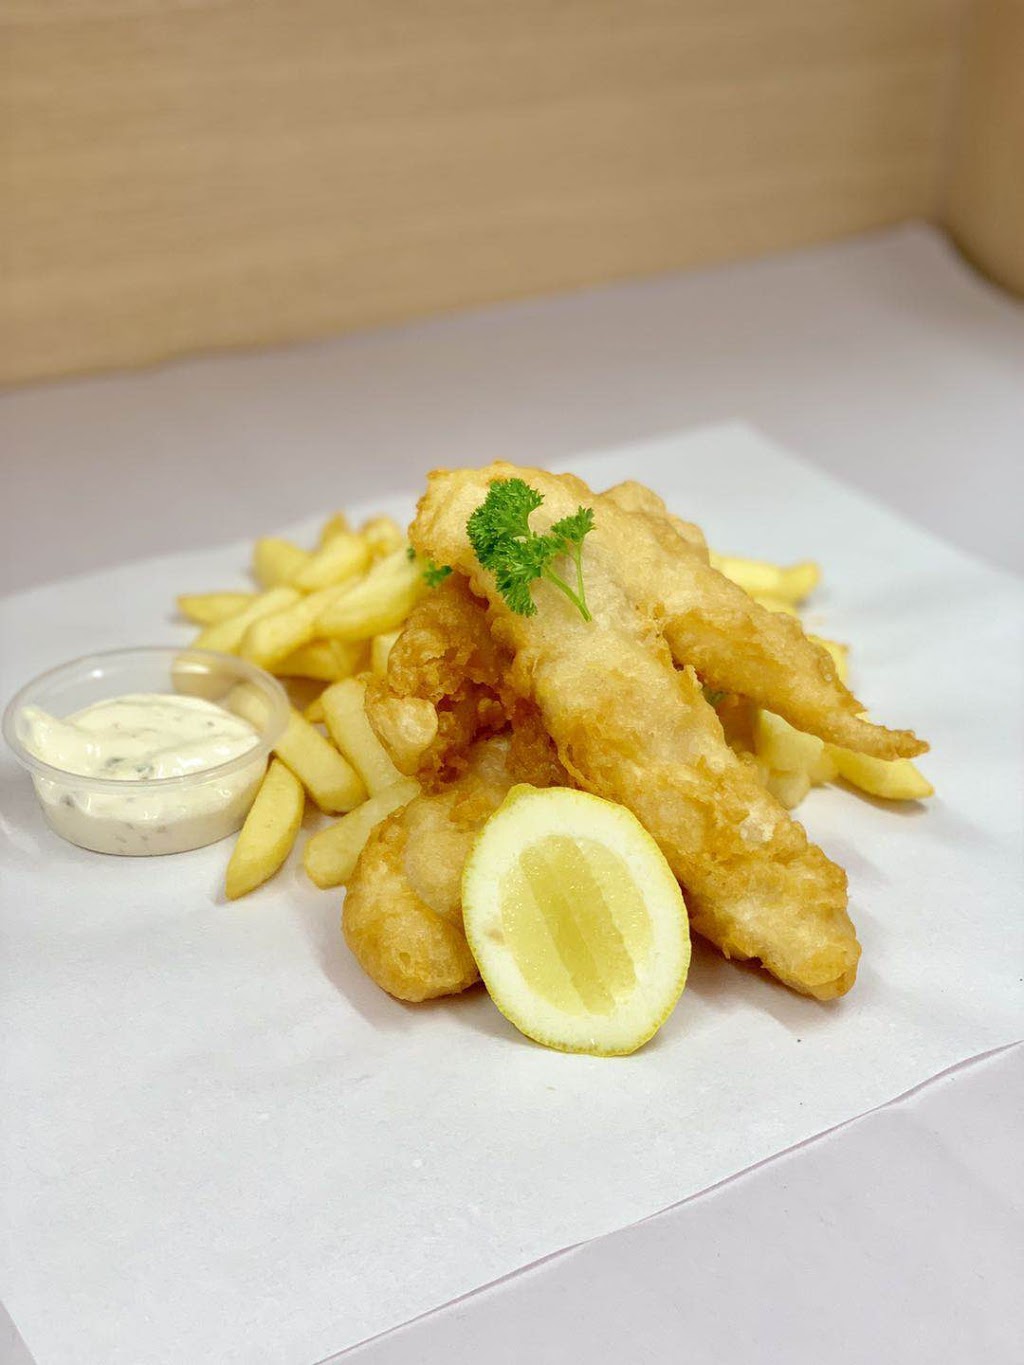 Willos fish and chips | restaurant | 9/42 Rostrata Ave, Willetton WA 6155, Australia | 0893545880 OR +61 8 9354 5880